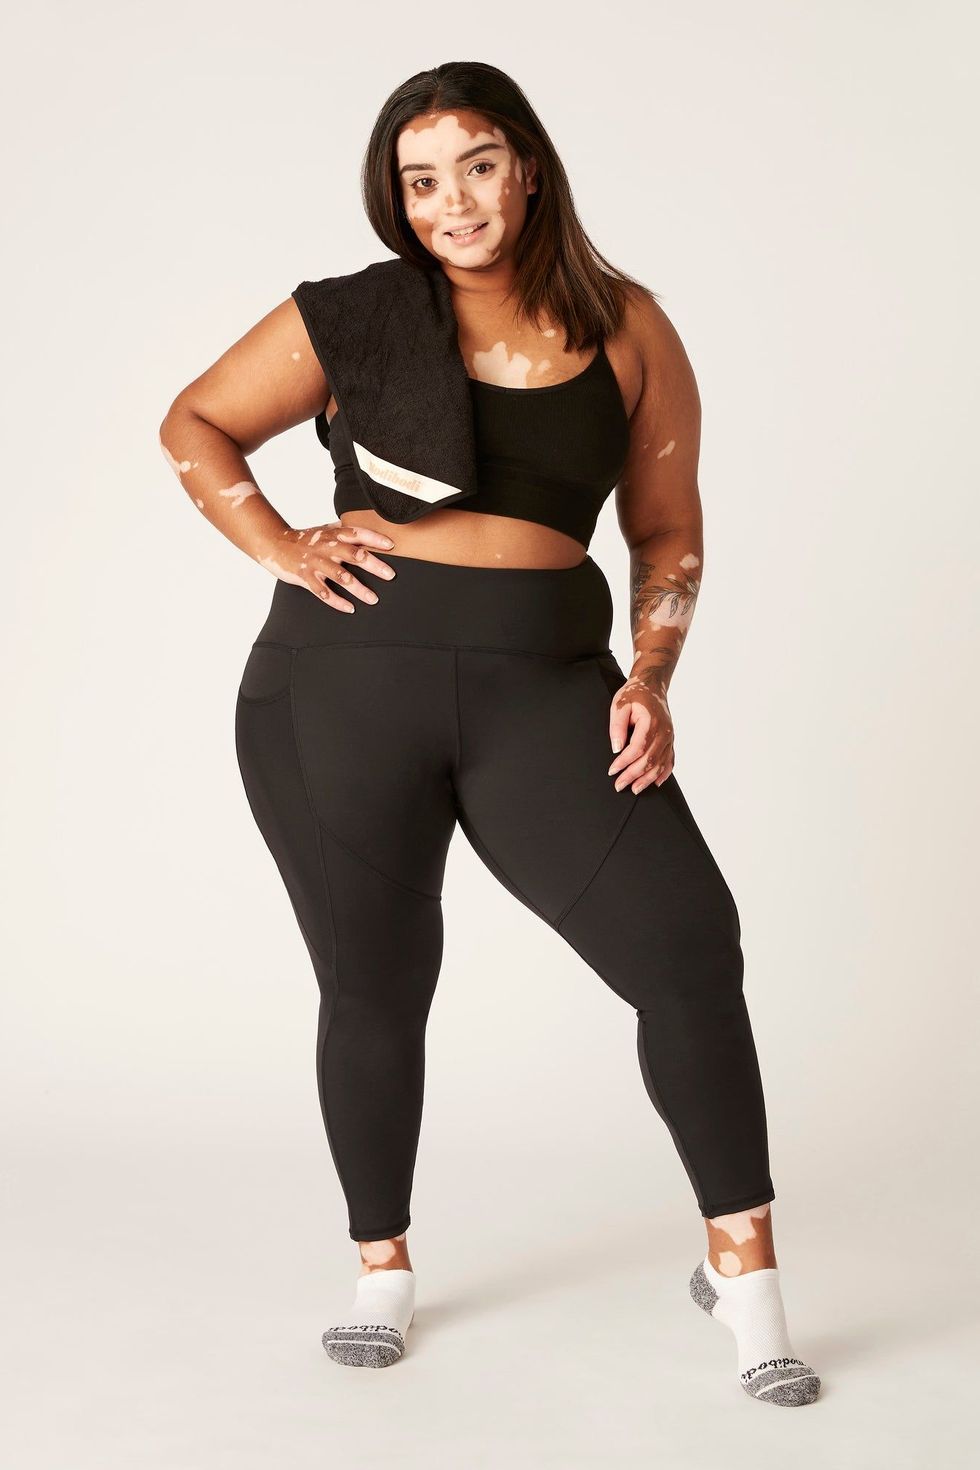 Nike Women's Plus Size Yoga Luxe 7 Inch Shorts